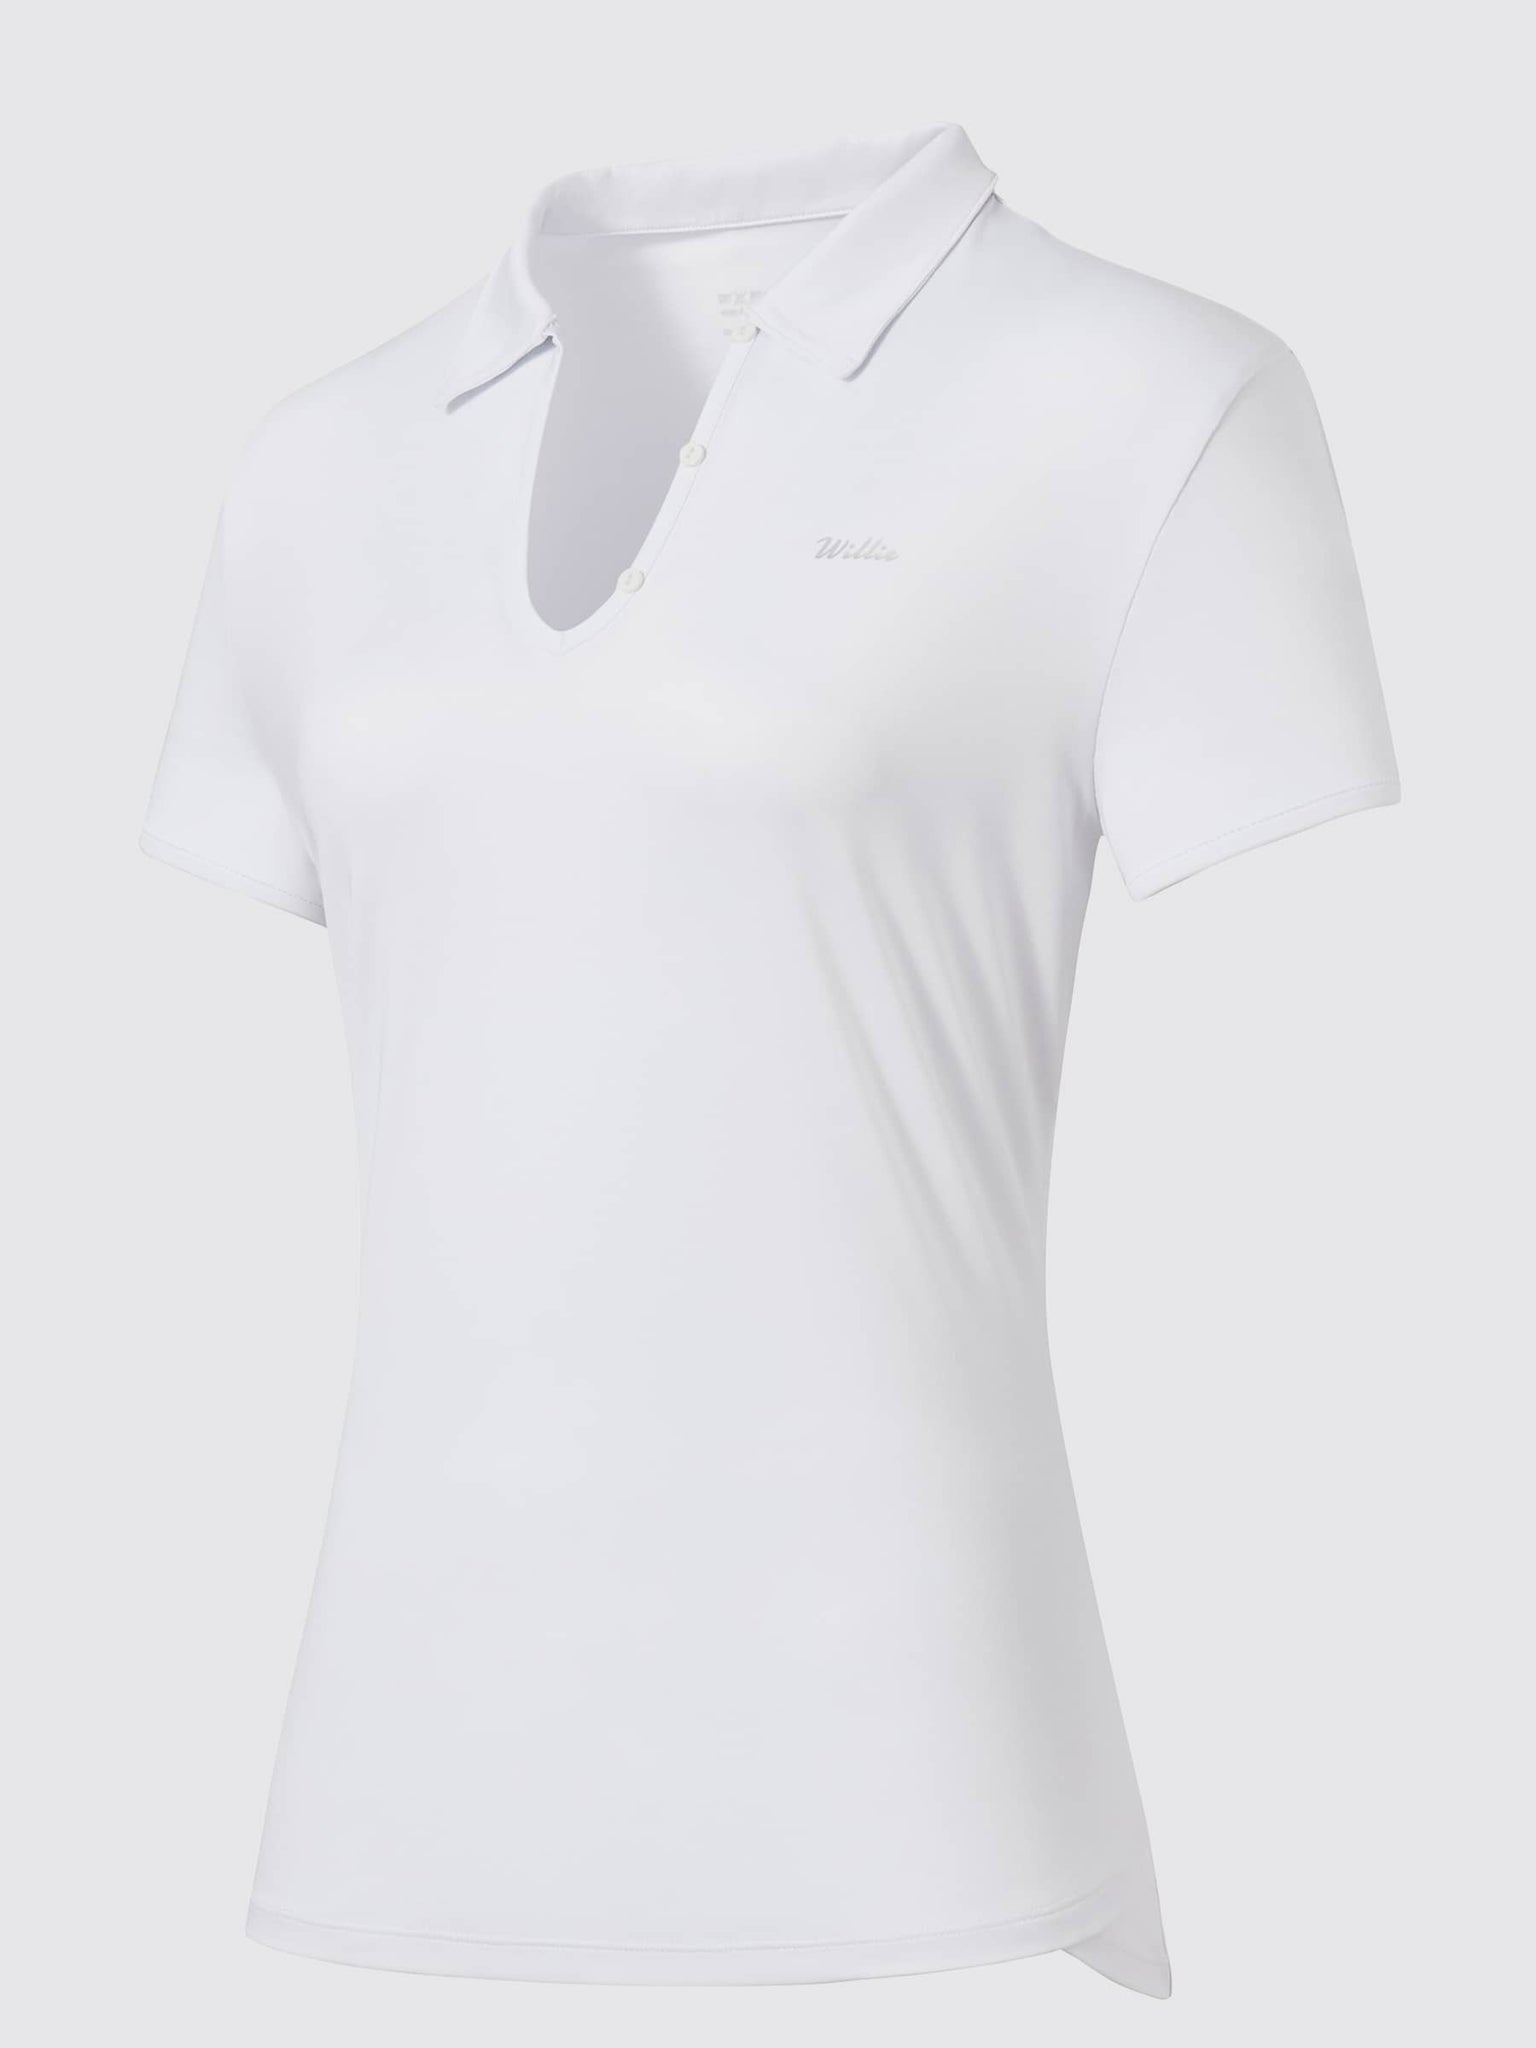 Willit Women's Golf Polo Short Sleeve Shirts_White3